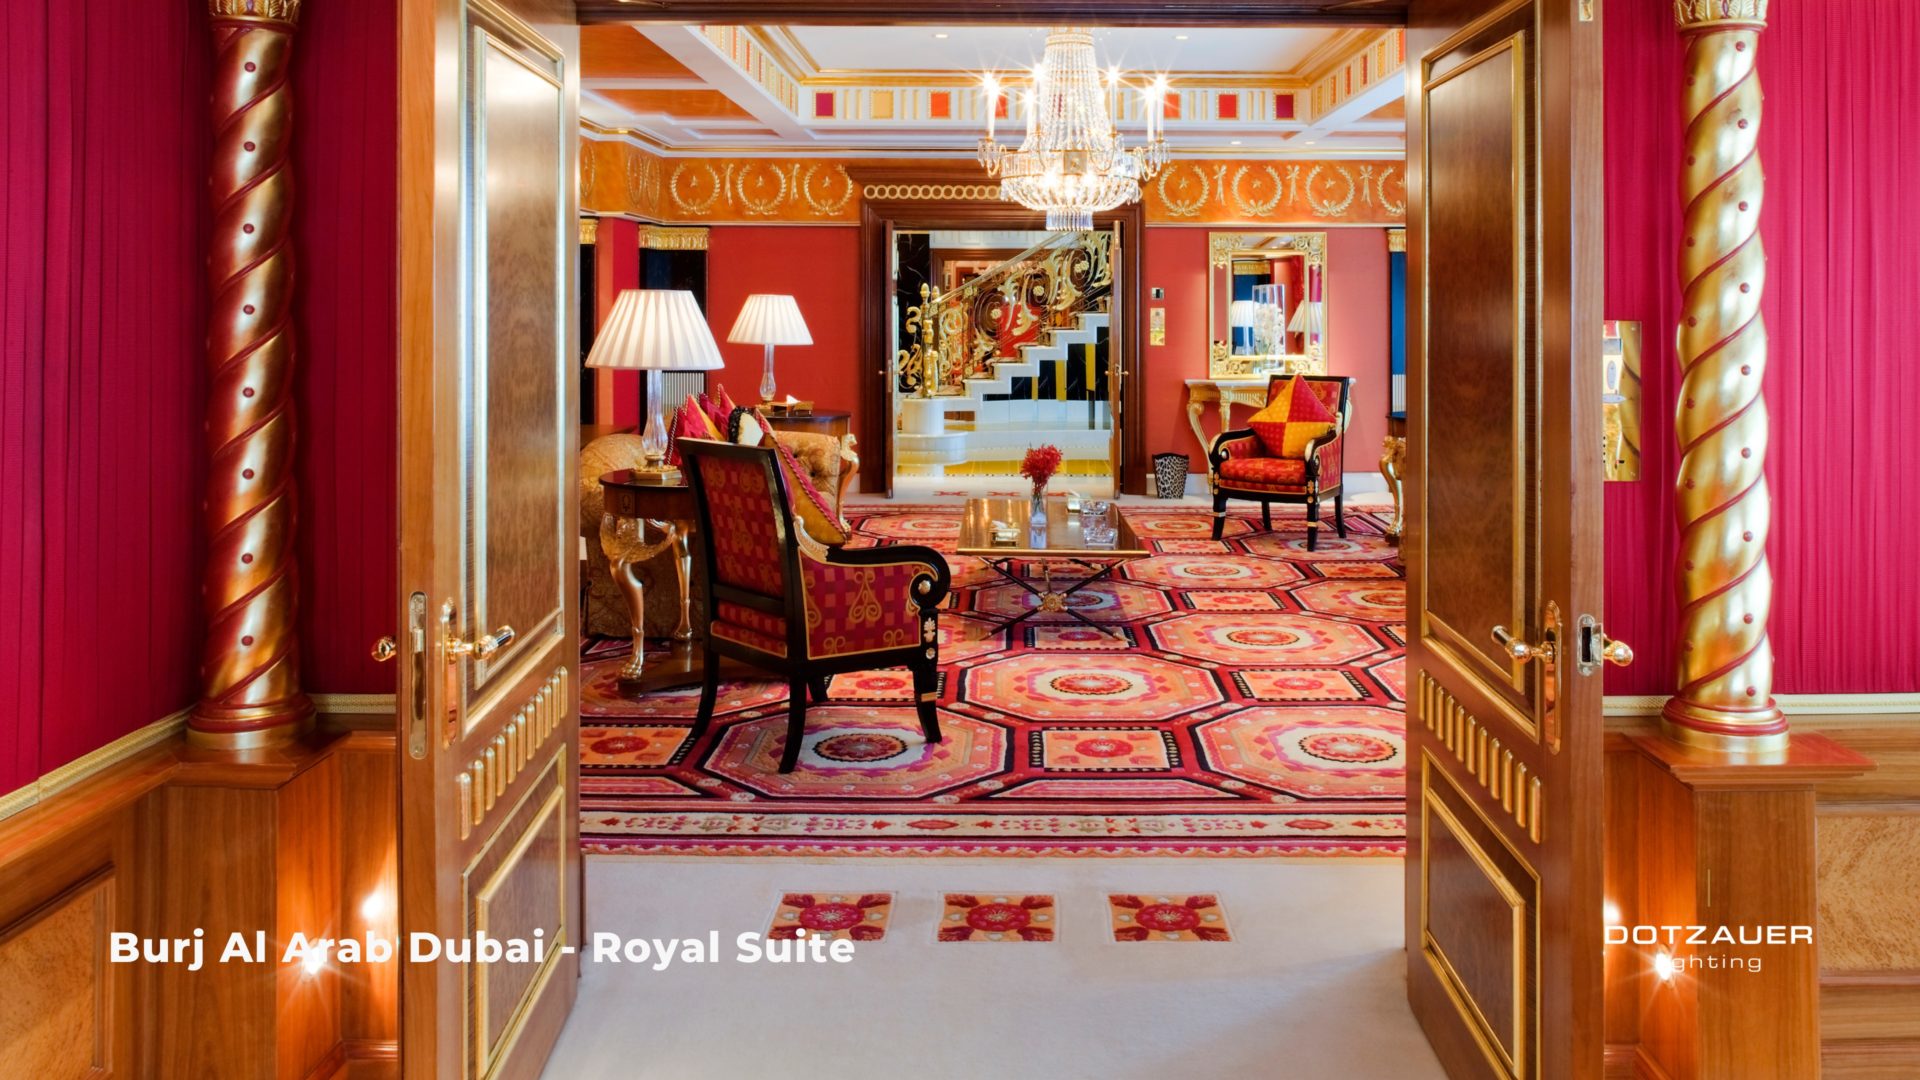 DOTZAUER - Luster im Burj Al Arab Hotel Dubai